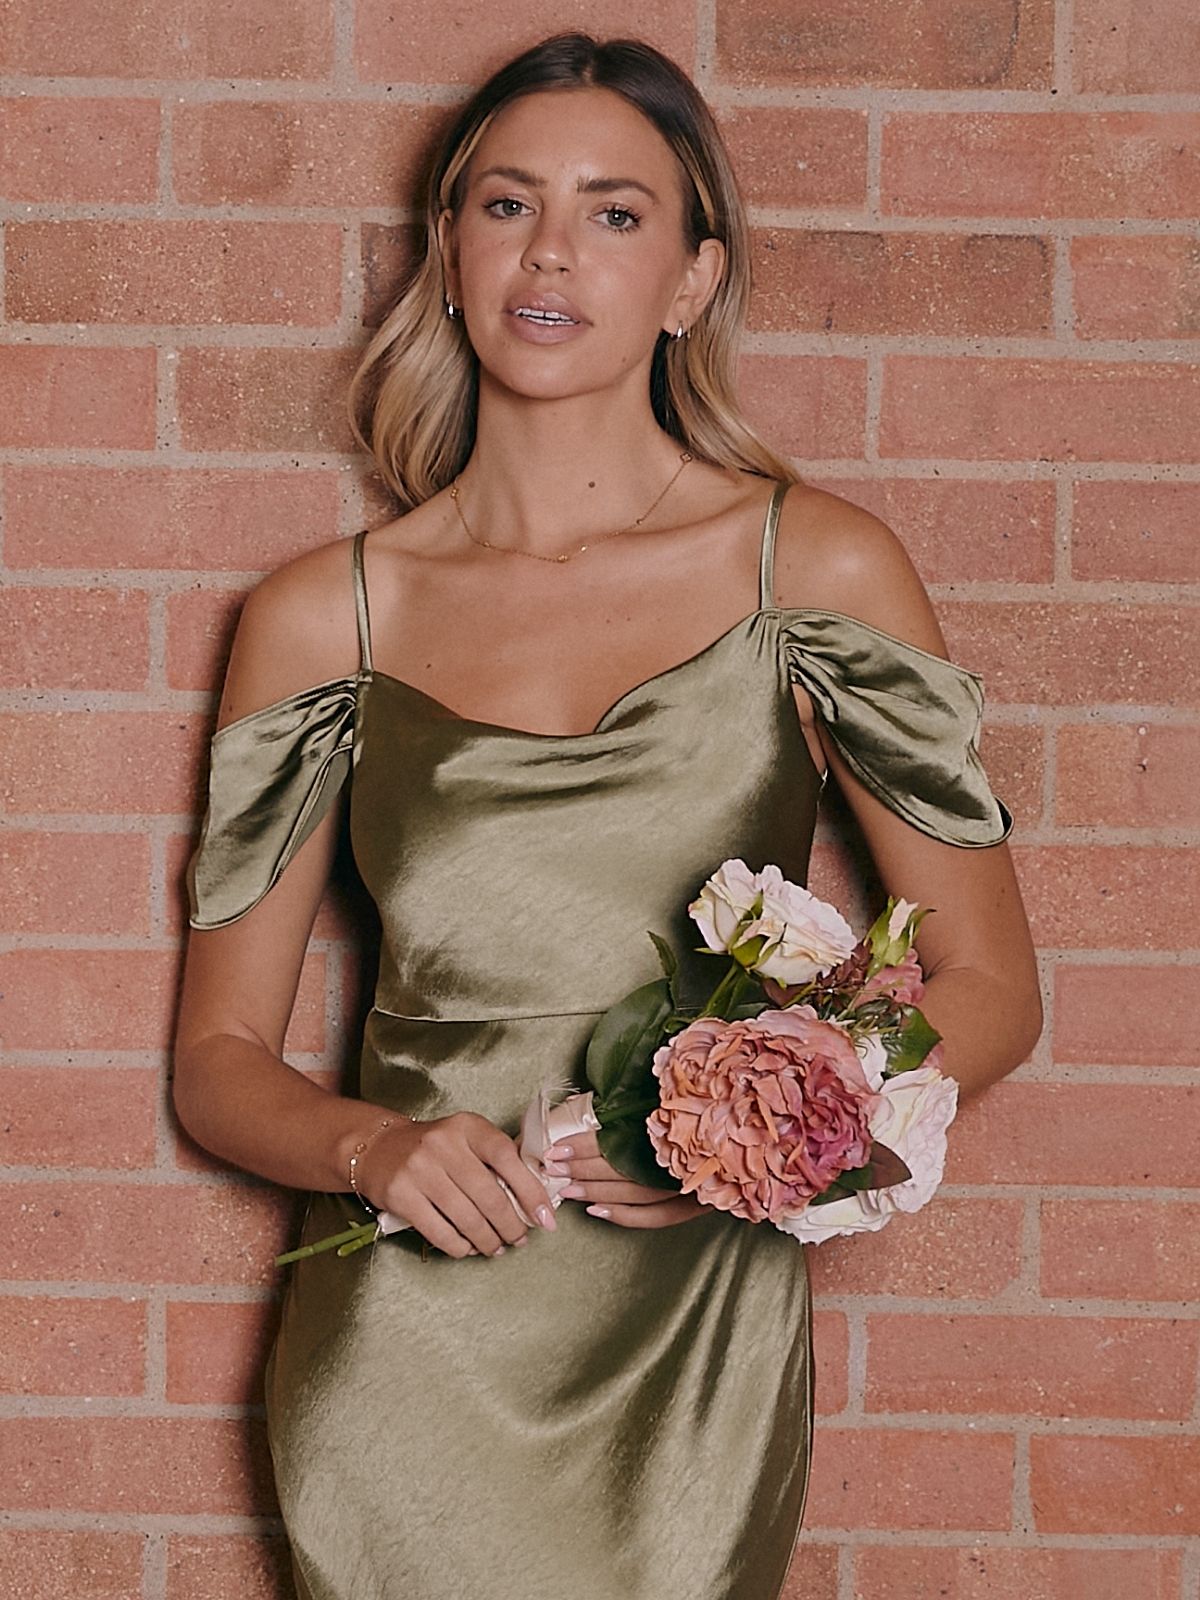 Cowl Neck Maxi Satin Bridesmaid Dress / Olive Green